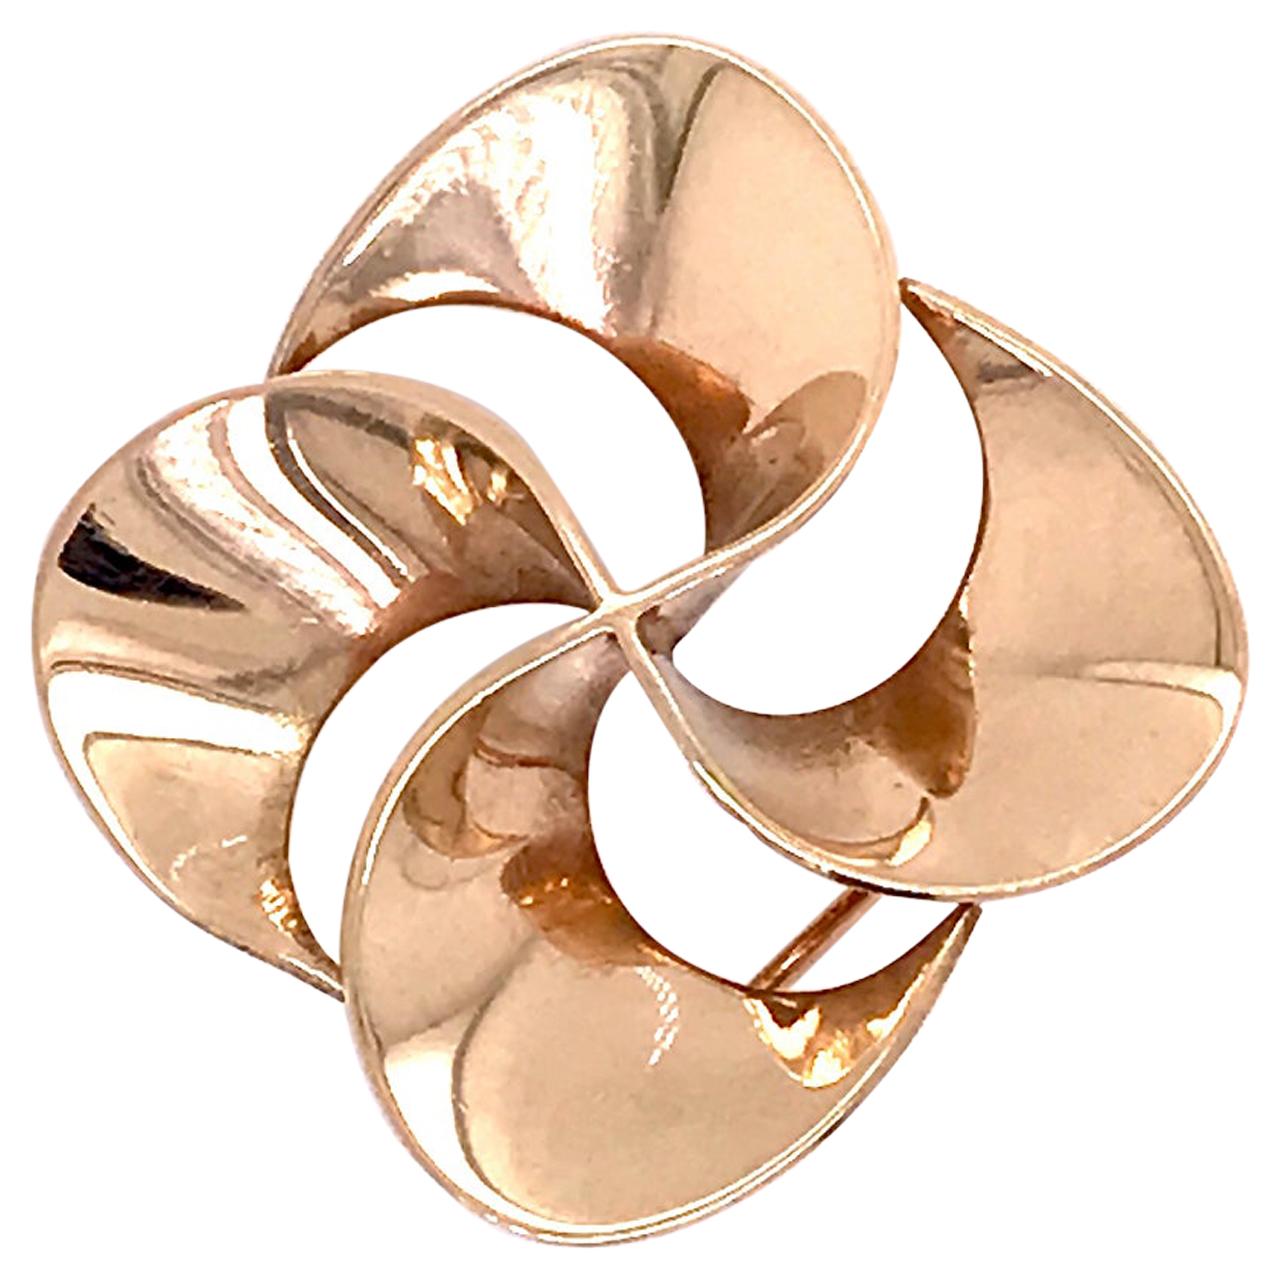 Tiffany & Co. 14 Karat Gold Modern Pin-Wheel Brooch or Pin